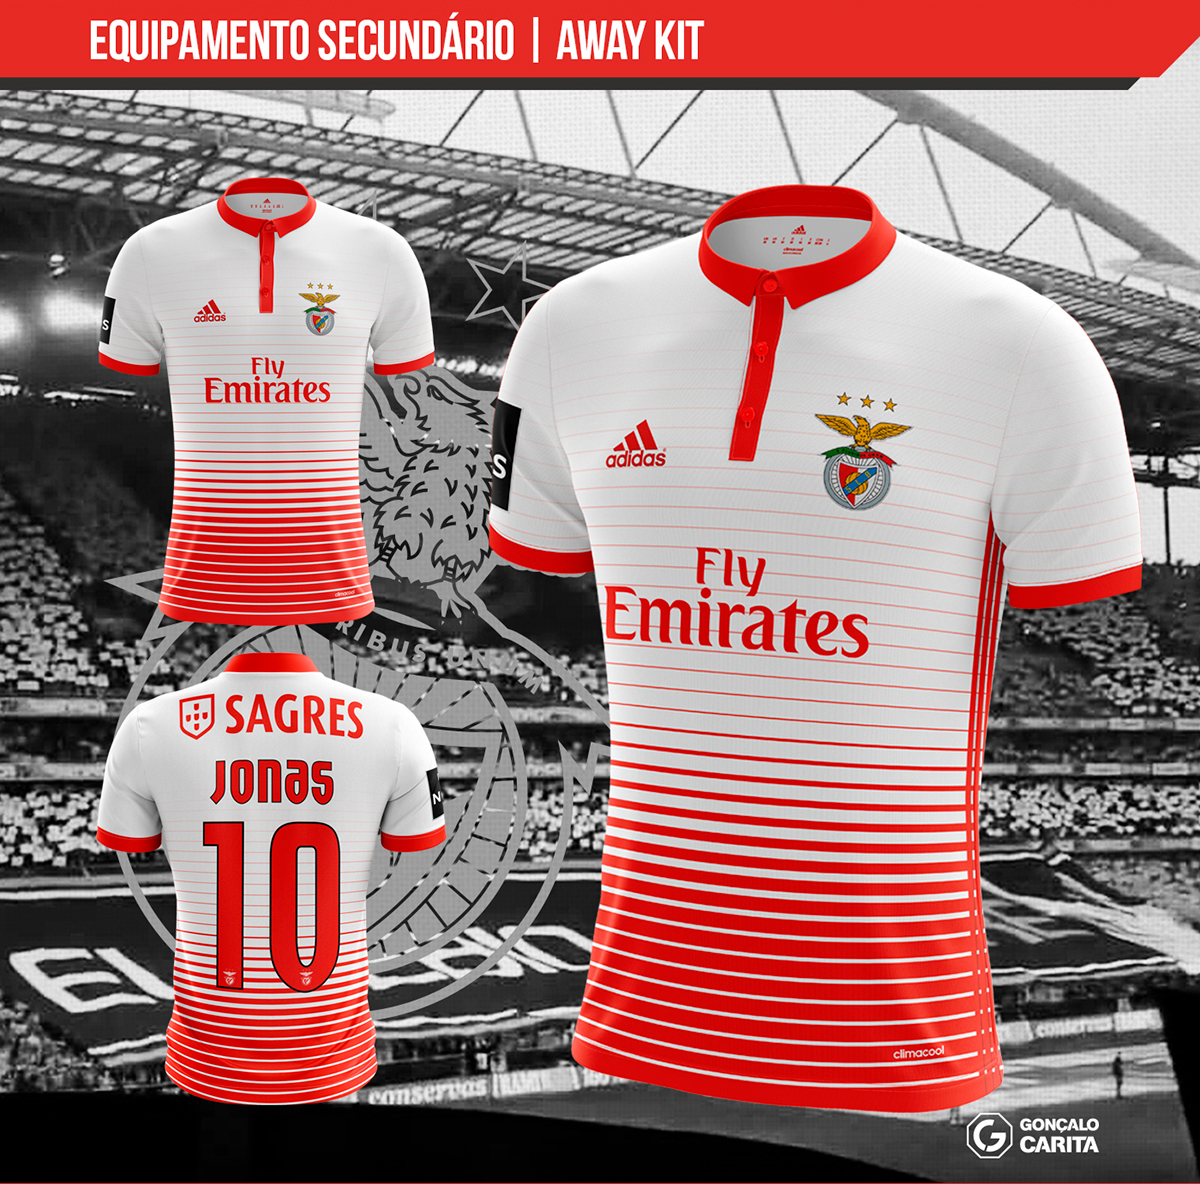 Benfica Kit : Benfica 16/17 Adidas Home Kit | 16/17 Kits | Football